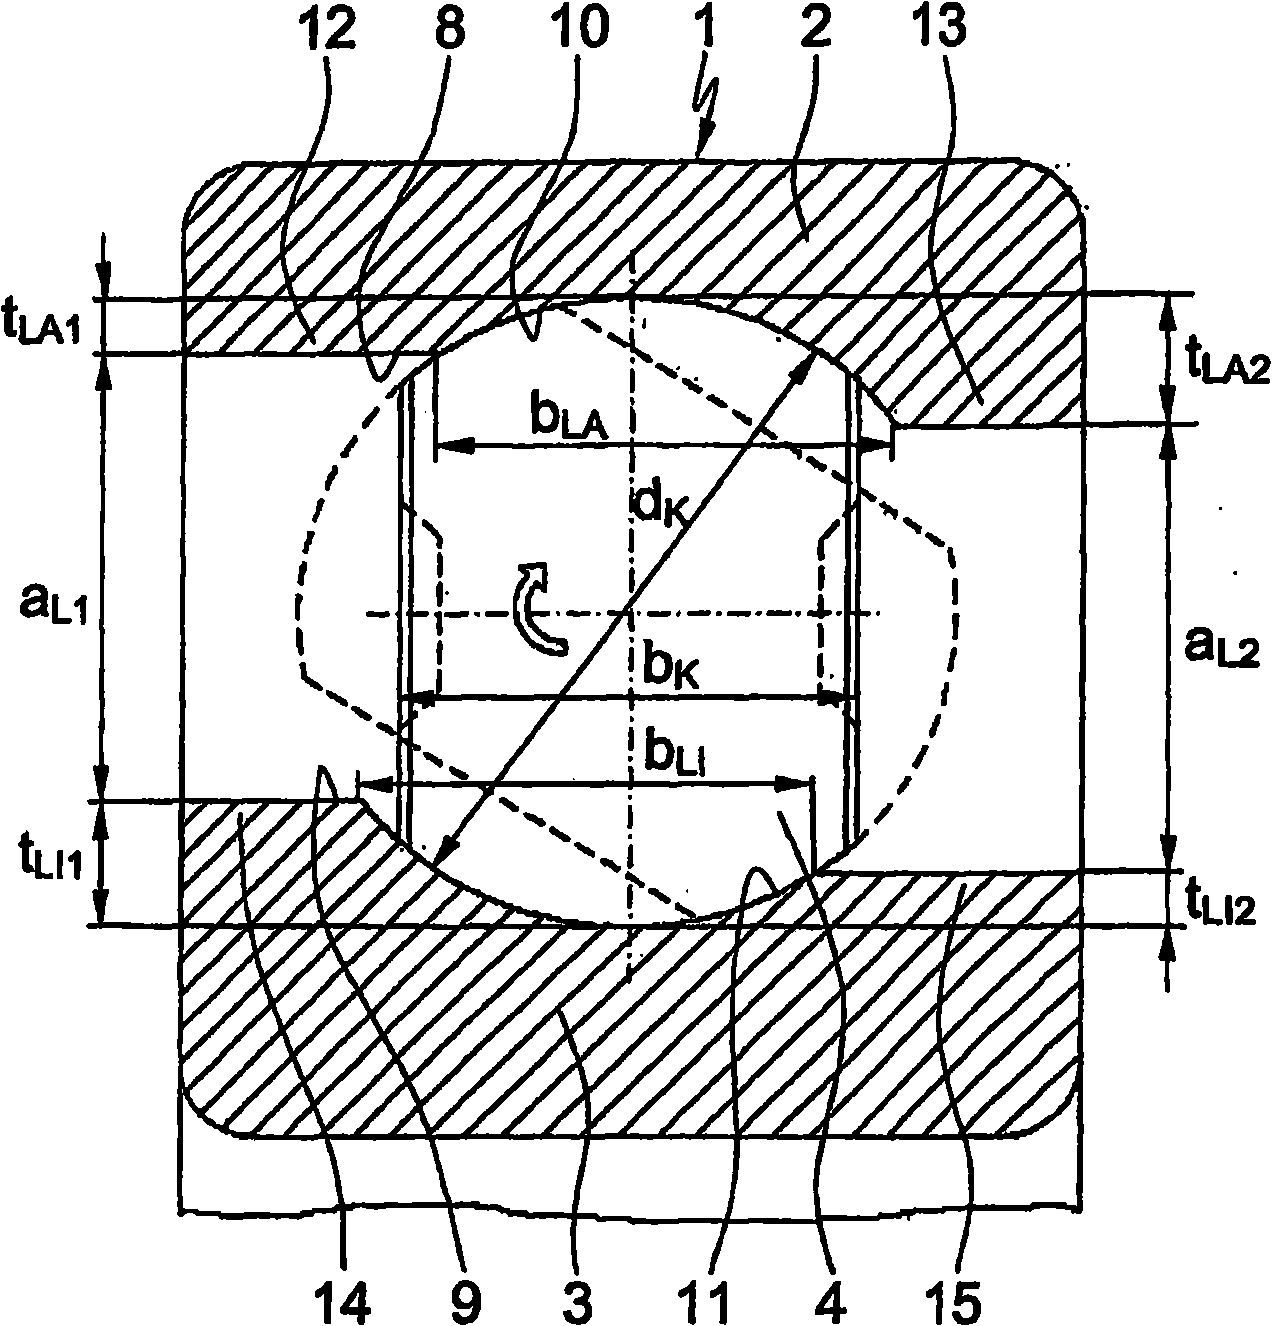 Radial rolling bearing, in particular single-row spherical-roller bearing